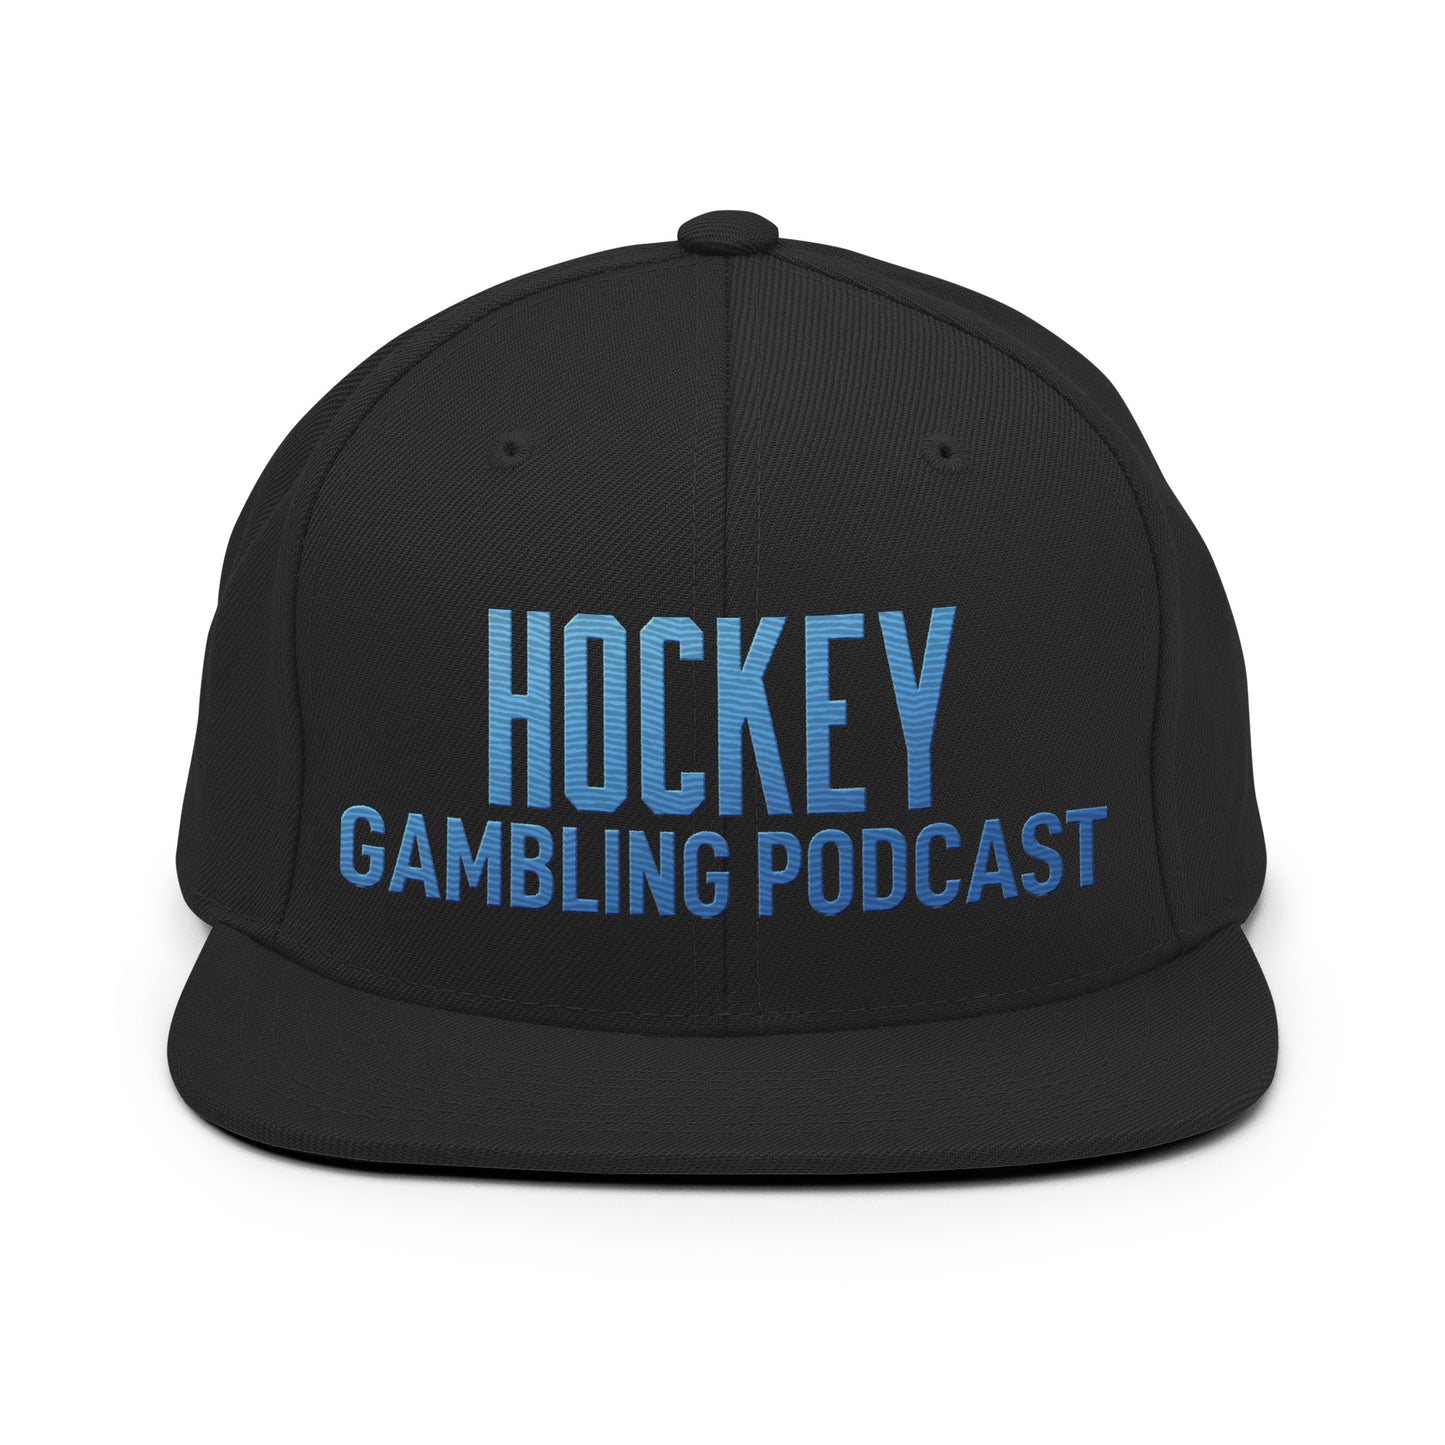 Hockey Gambling Podcast - Snapback Hat